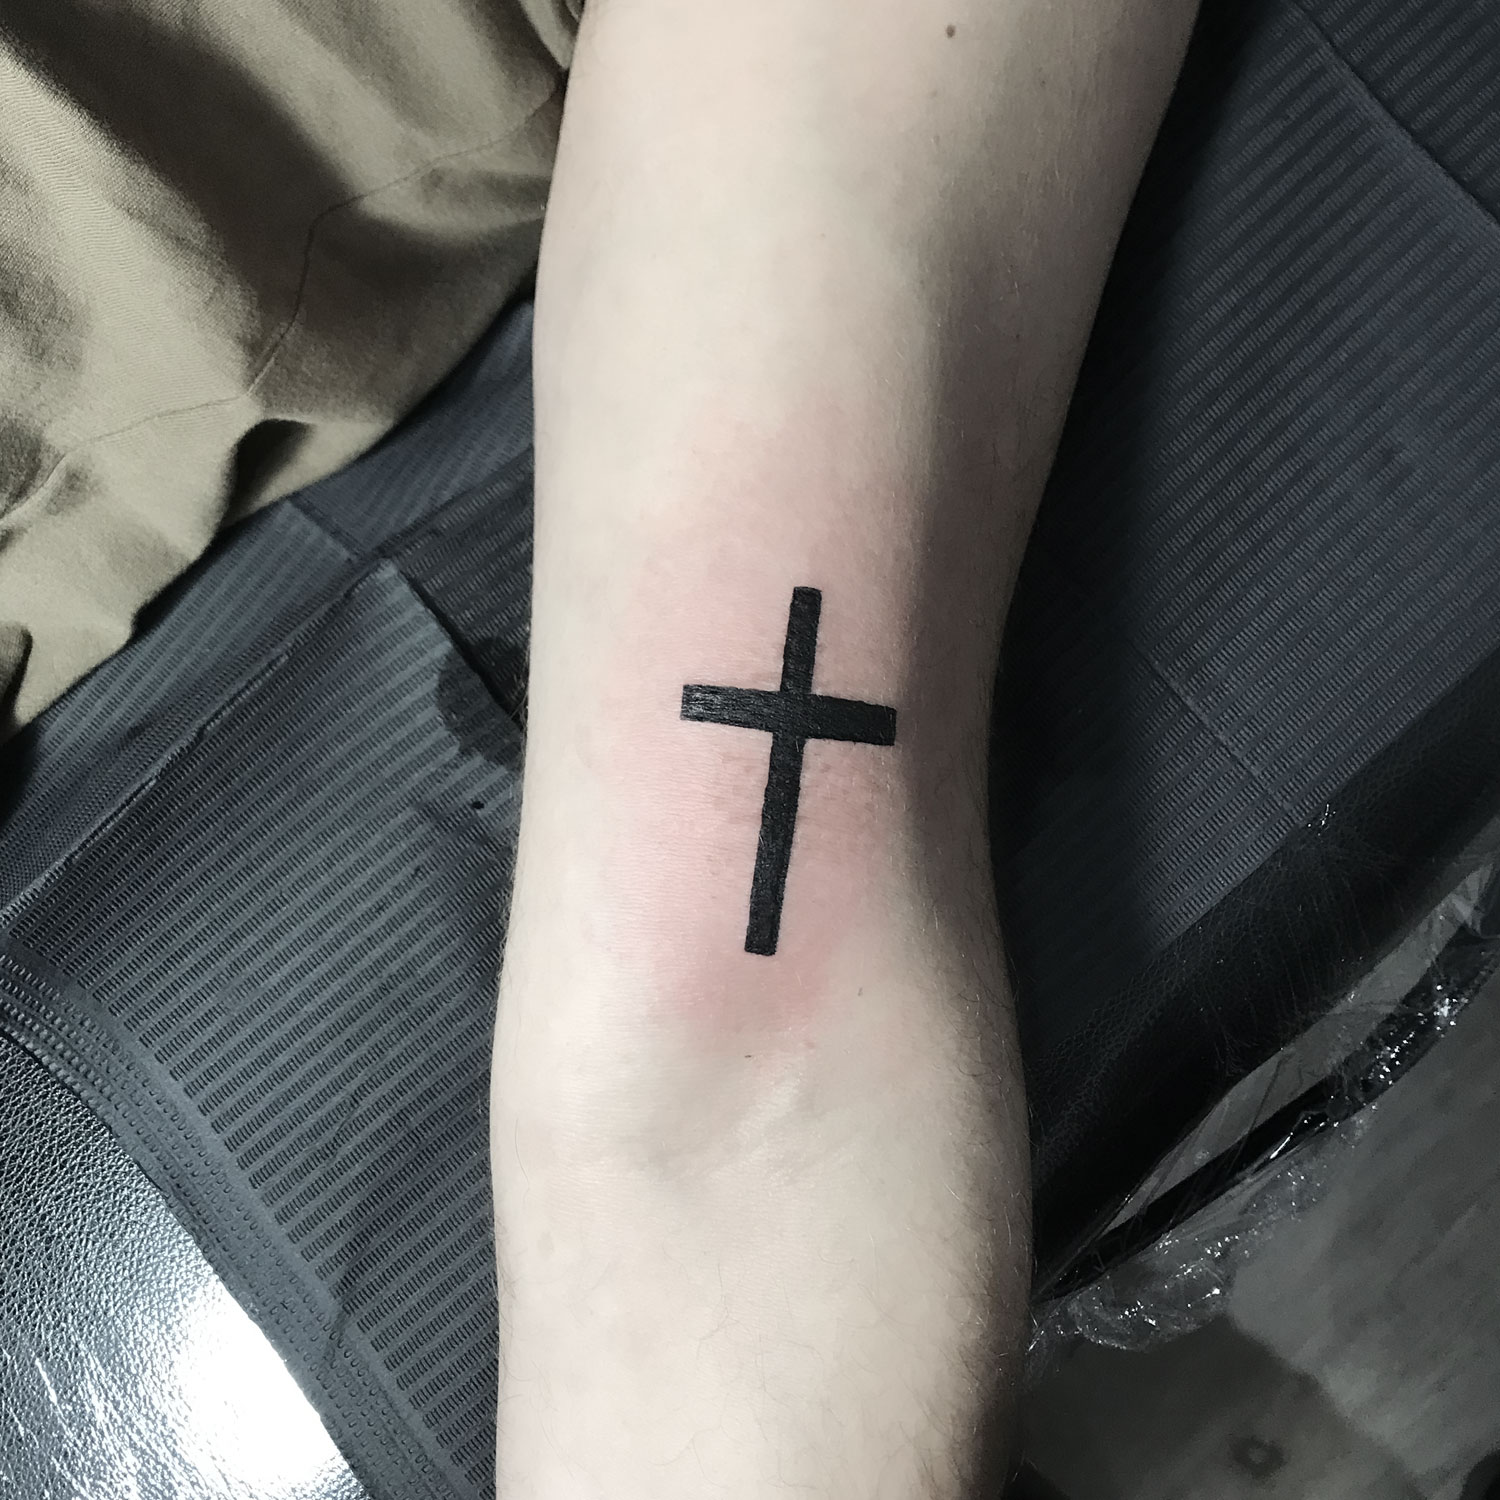 Tatuaje black work de una cruz